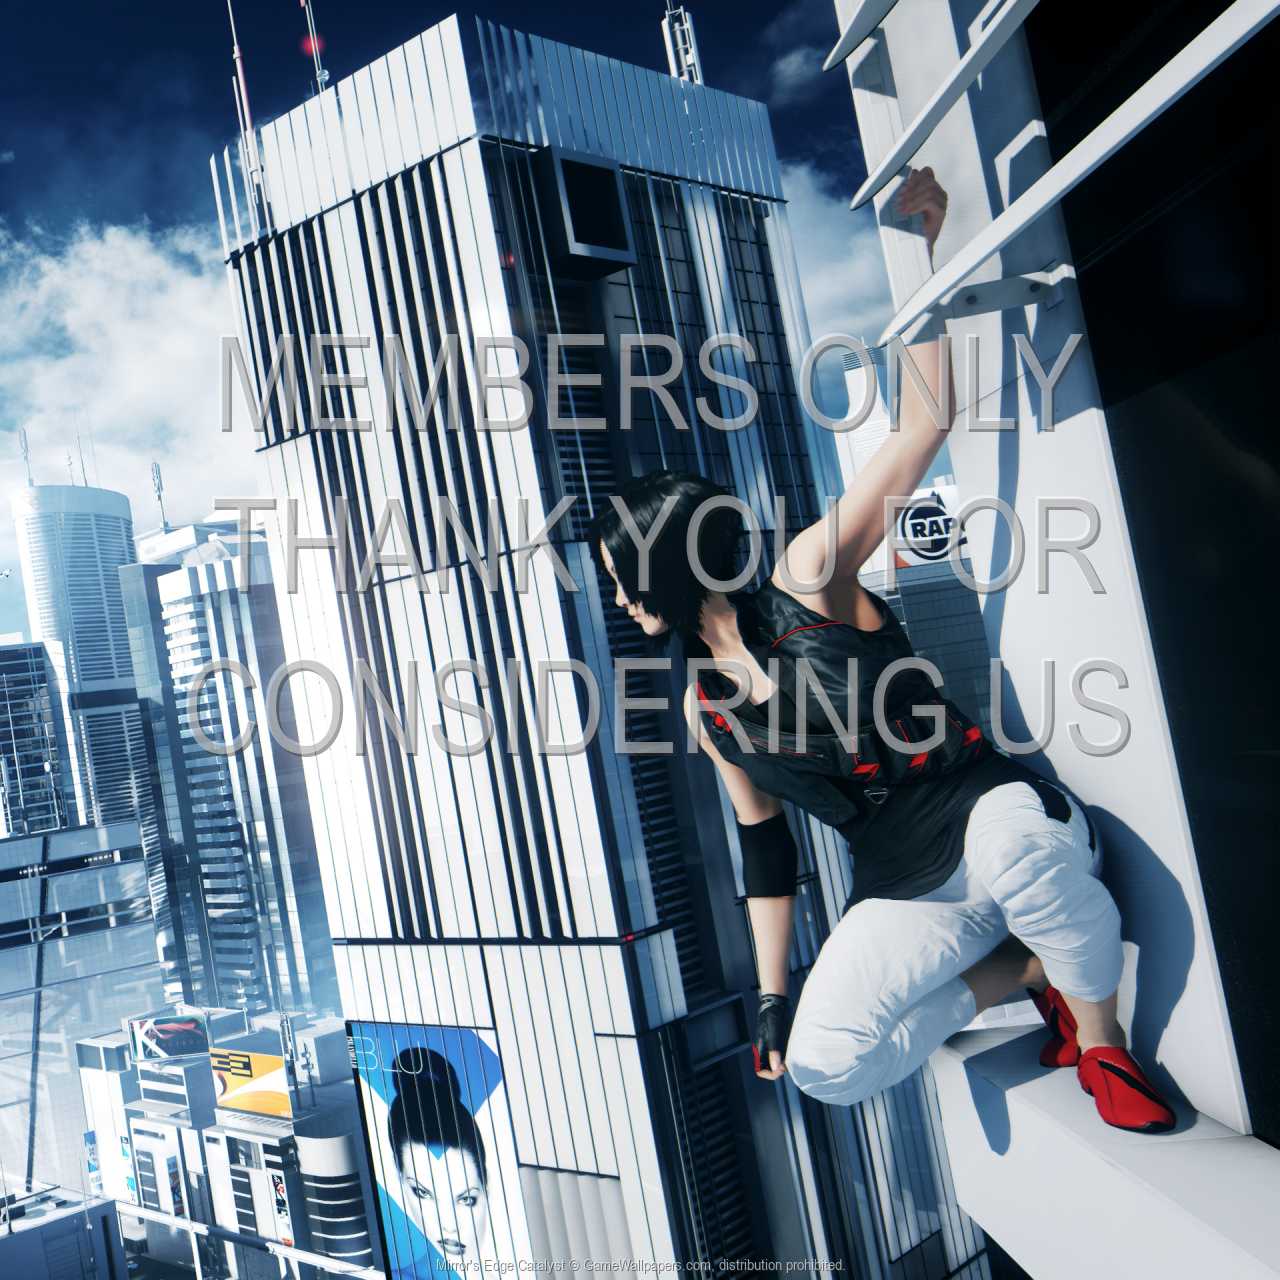 Mirror's Edge: Catalyst 720p Horizontal Mobile wallpaper or background 01